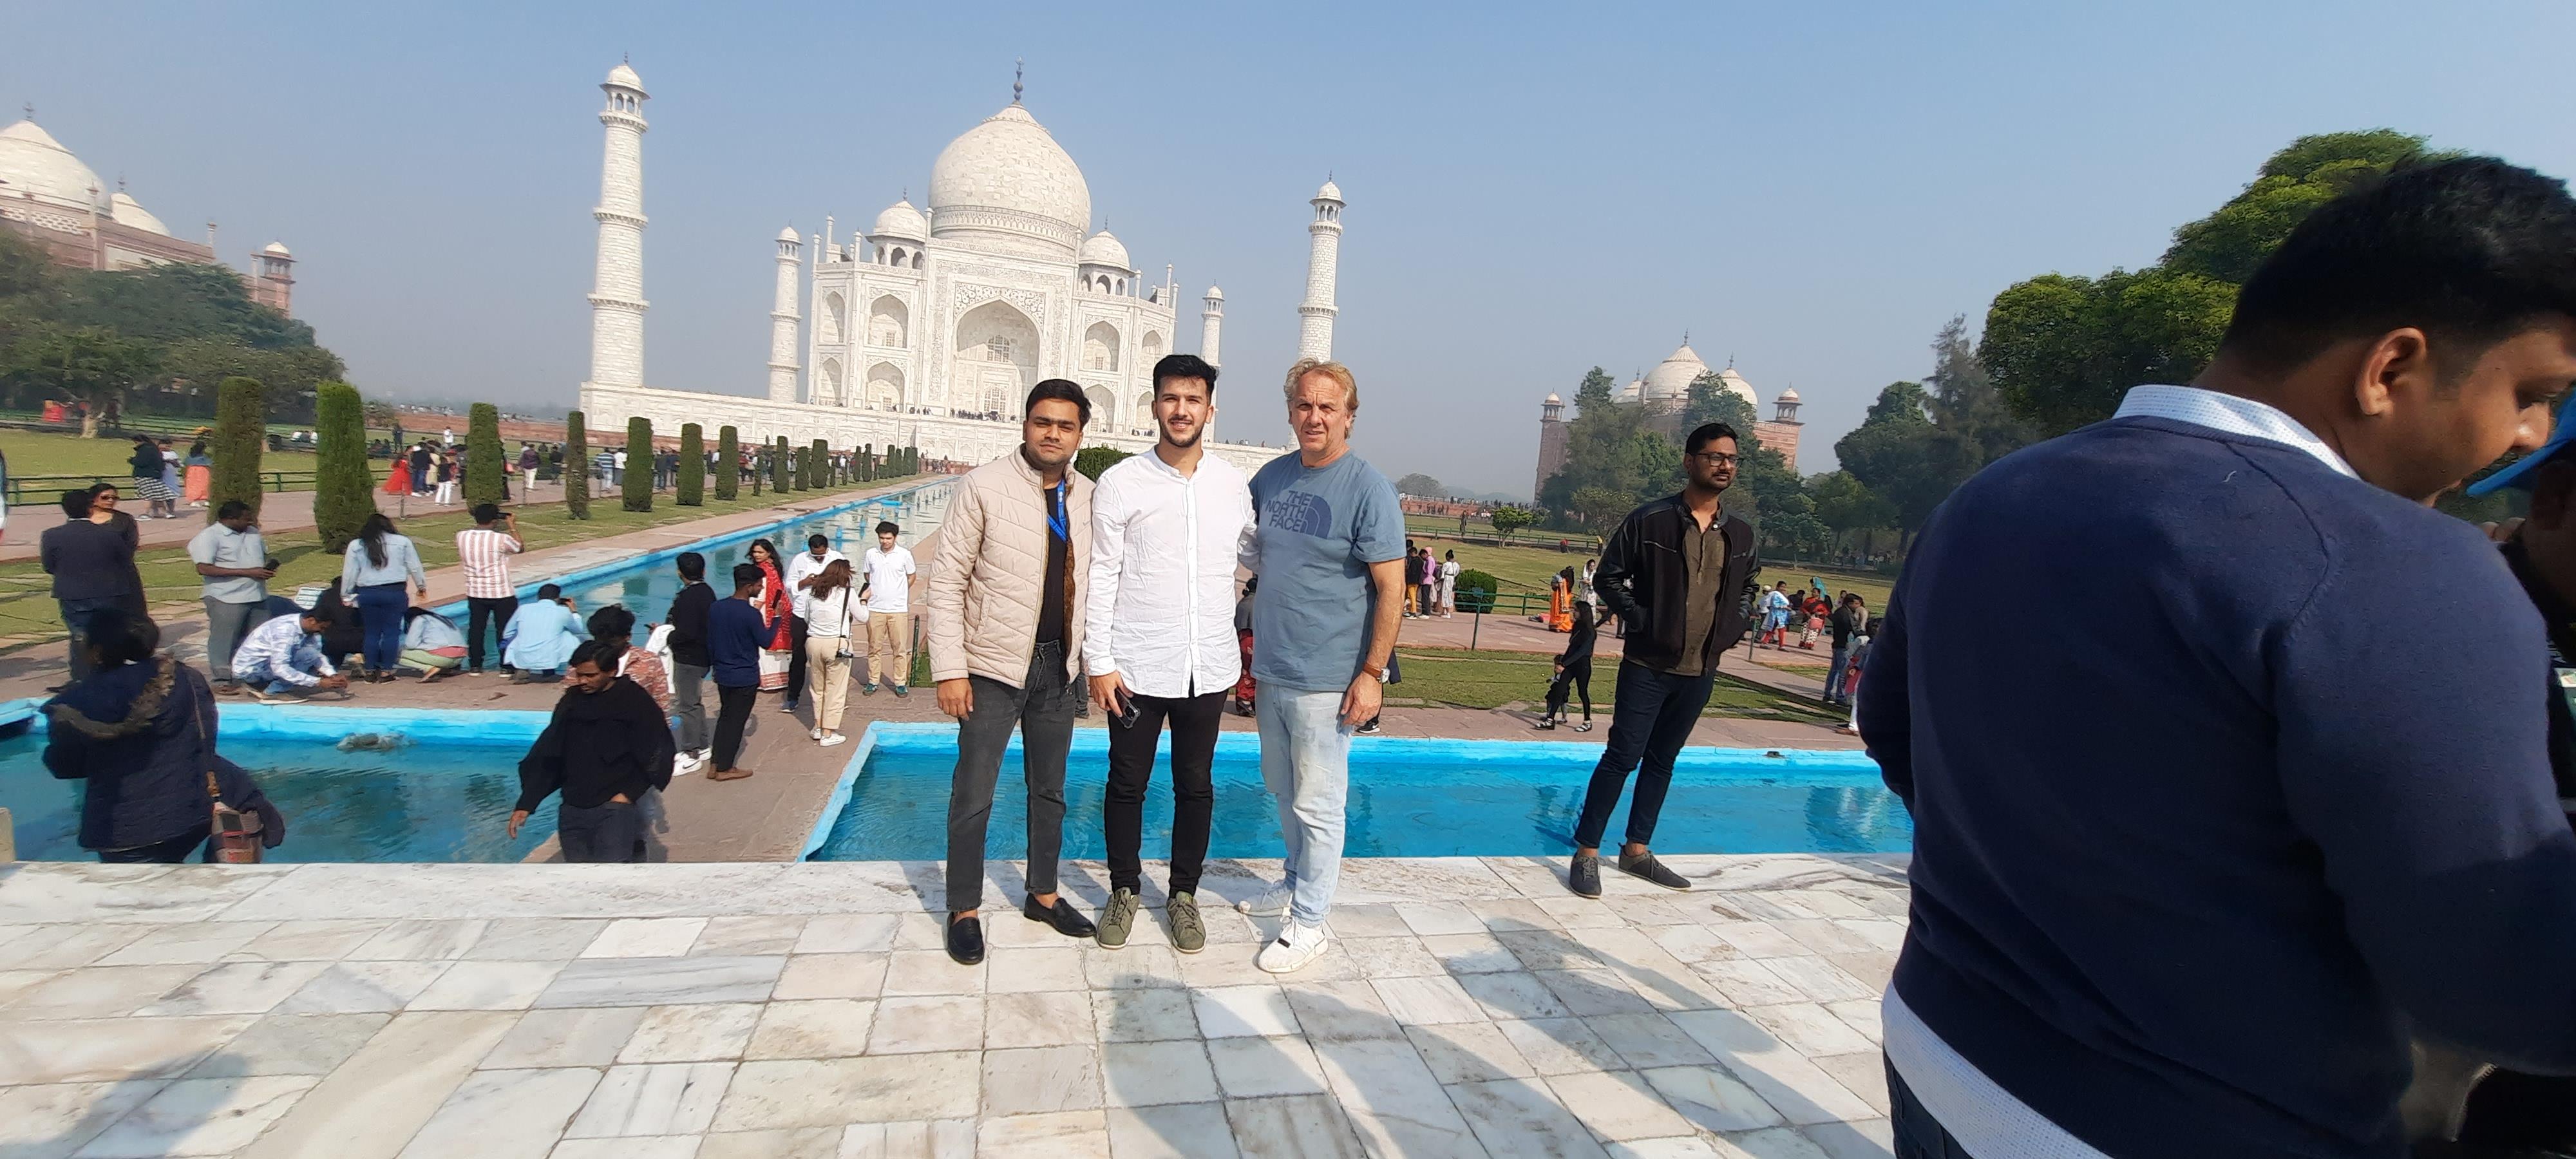 Taj-Mahal-&-Agra-Tour-by-Private-Car-from-Delhi-2